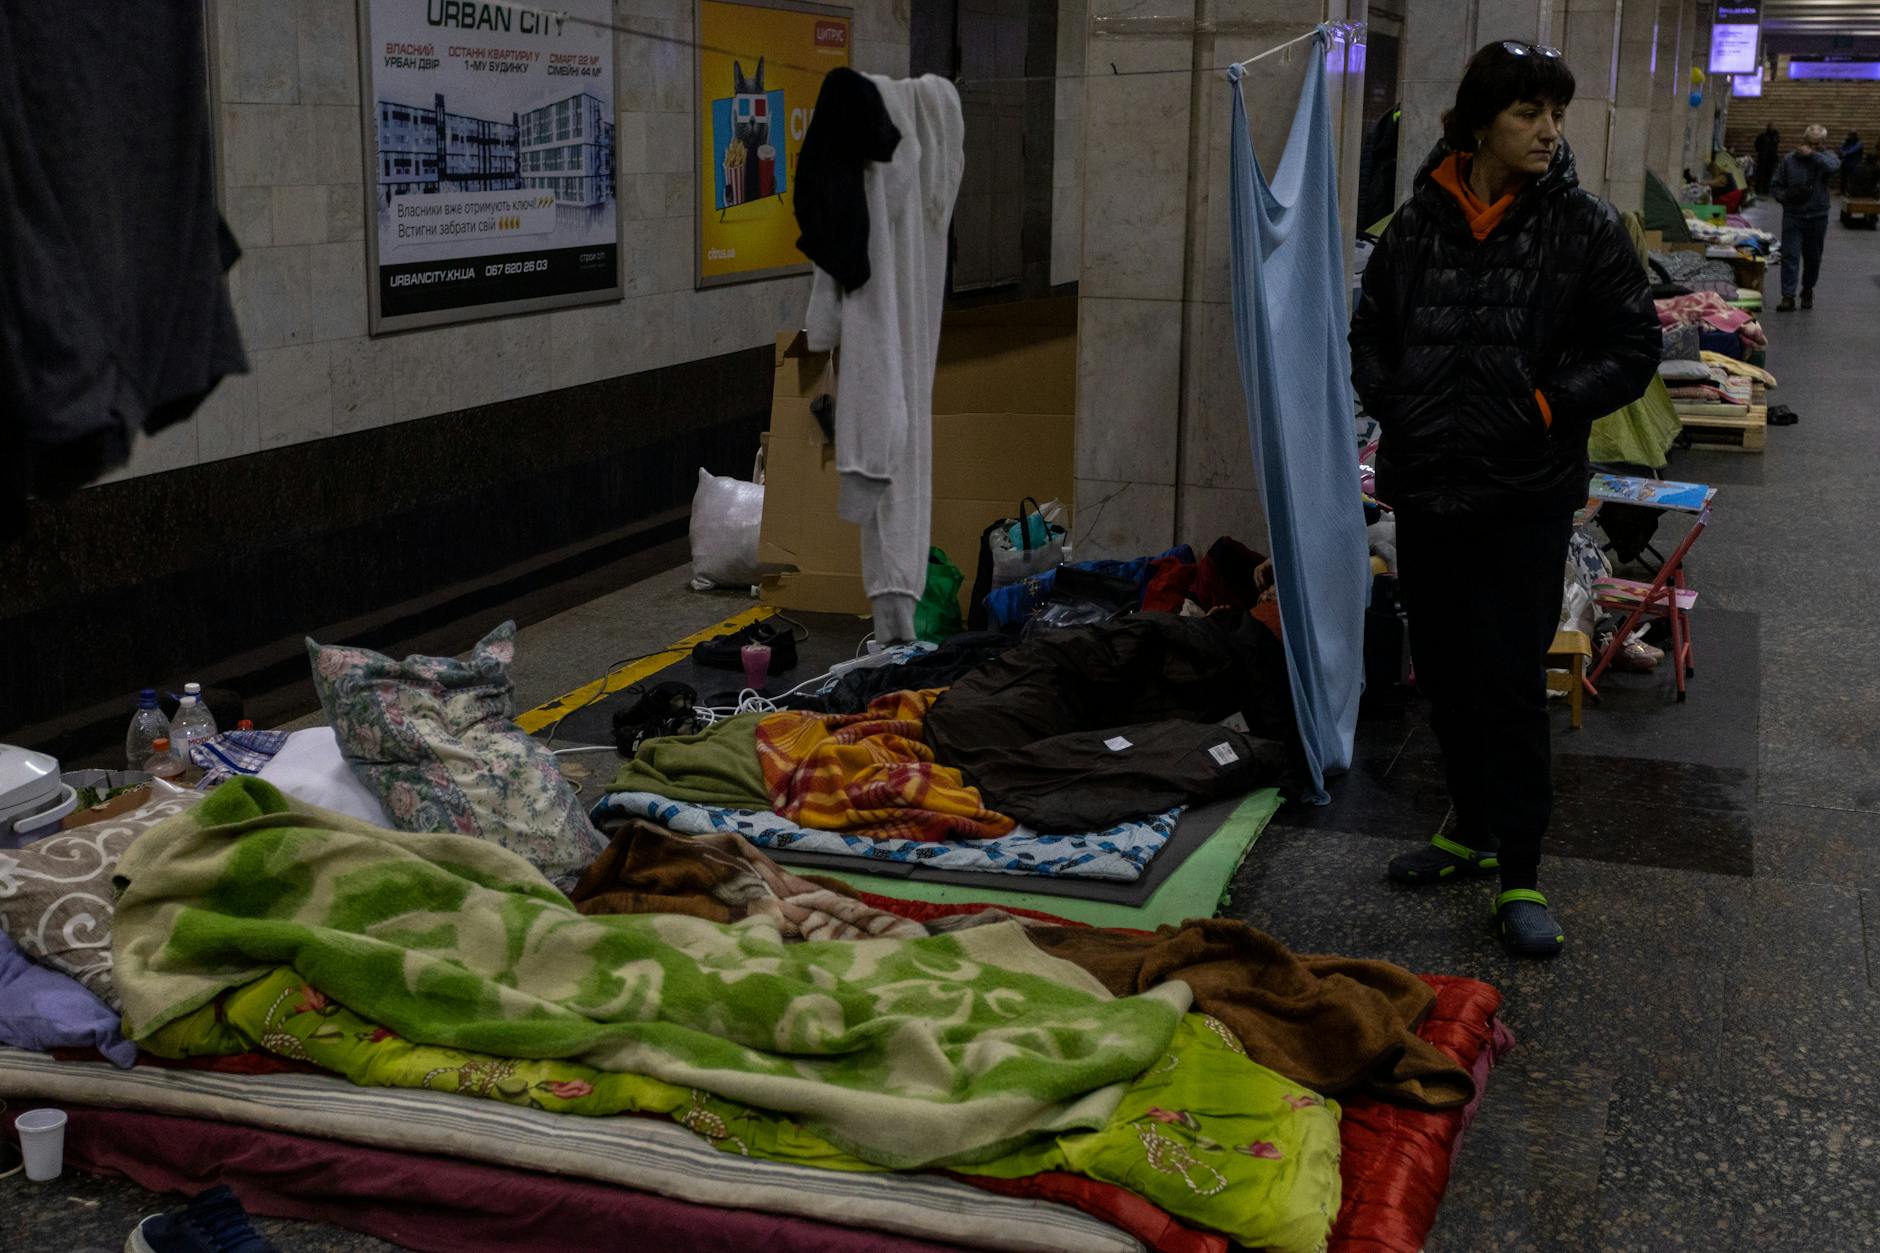 refugees sleeping at station